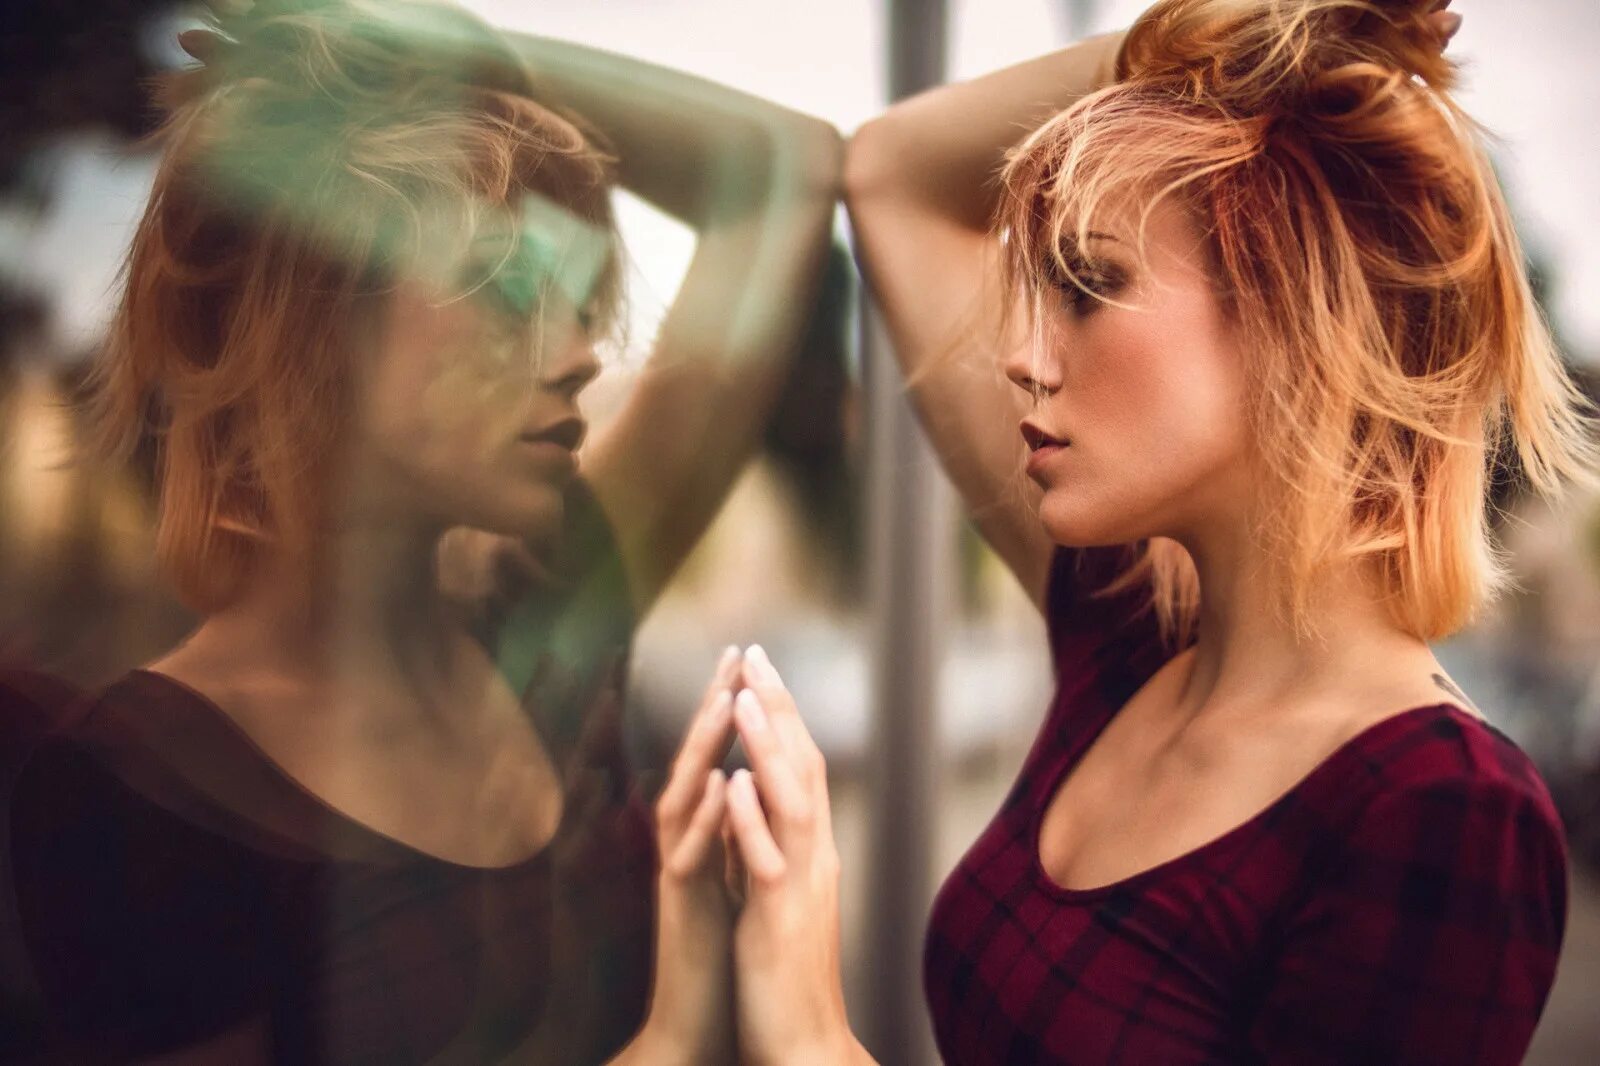 Отражение в зеркале. Портрет с отражением. Отражение девушки в зеркале. Фотосессия отражение в зеркале.